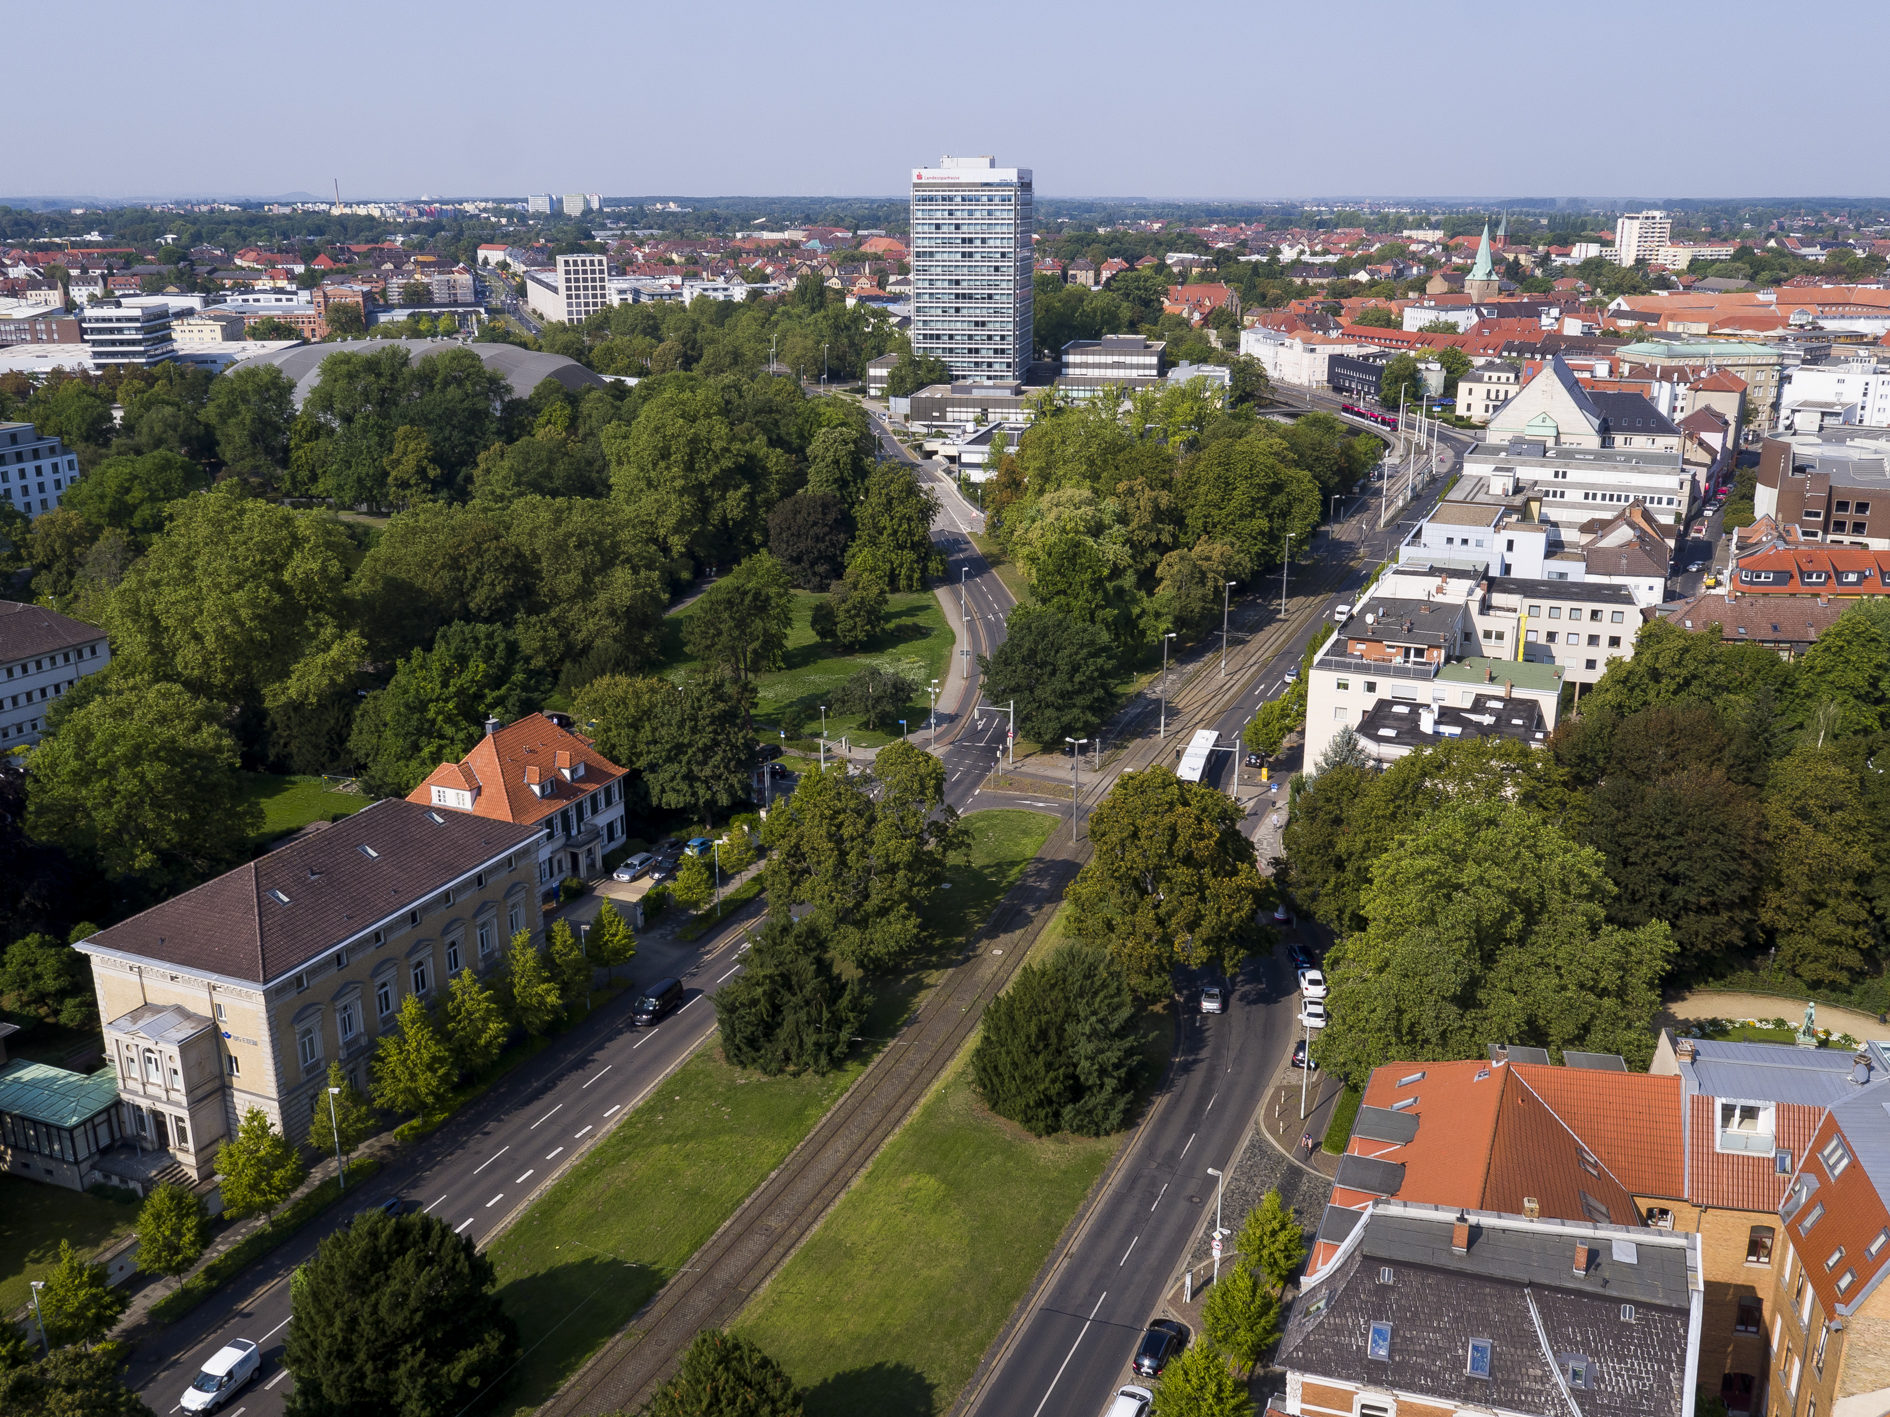 Luftbild Lessingplatz, Bruchtorwall, Kalenwall und Kreuzung Gieseler